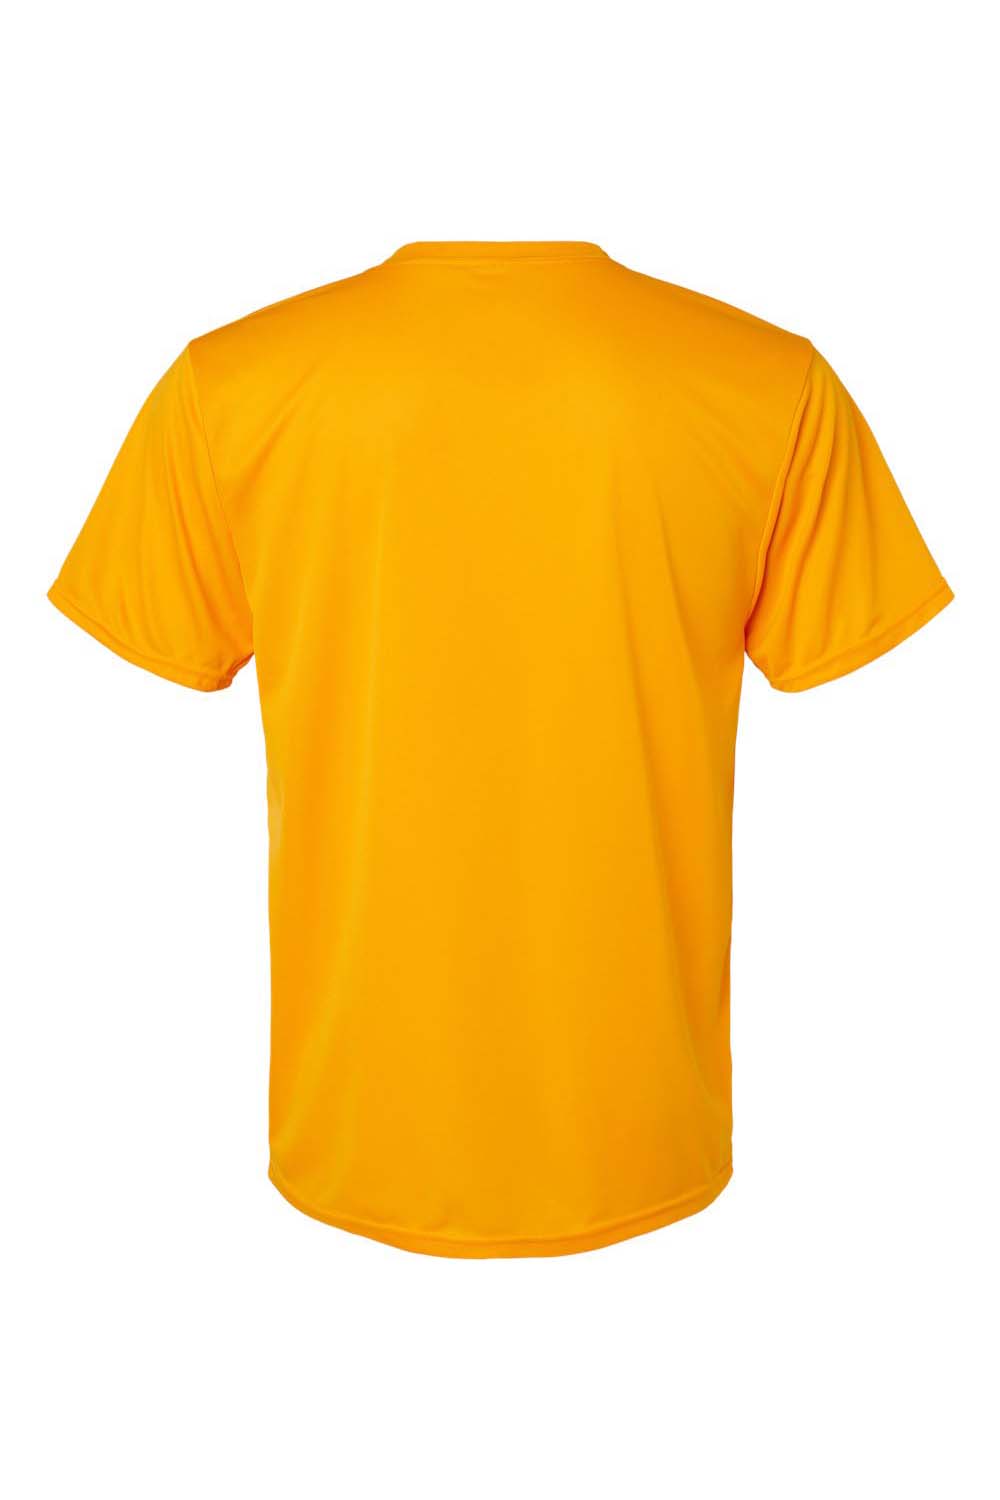 Augusta Sportswear 790 Mens Moisture Wicking Short Sleeve Crewneck T-Shirt Gold Model Flat Back